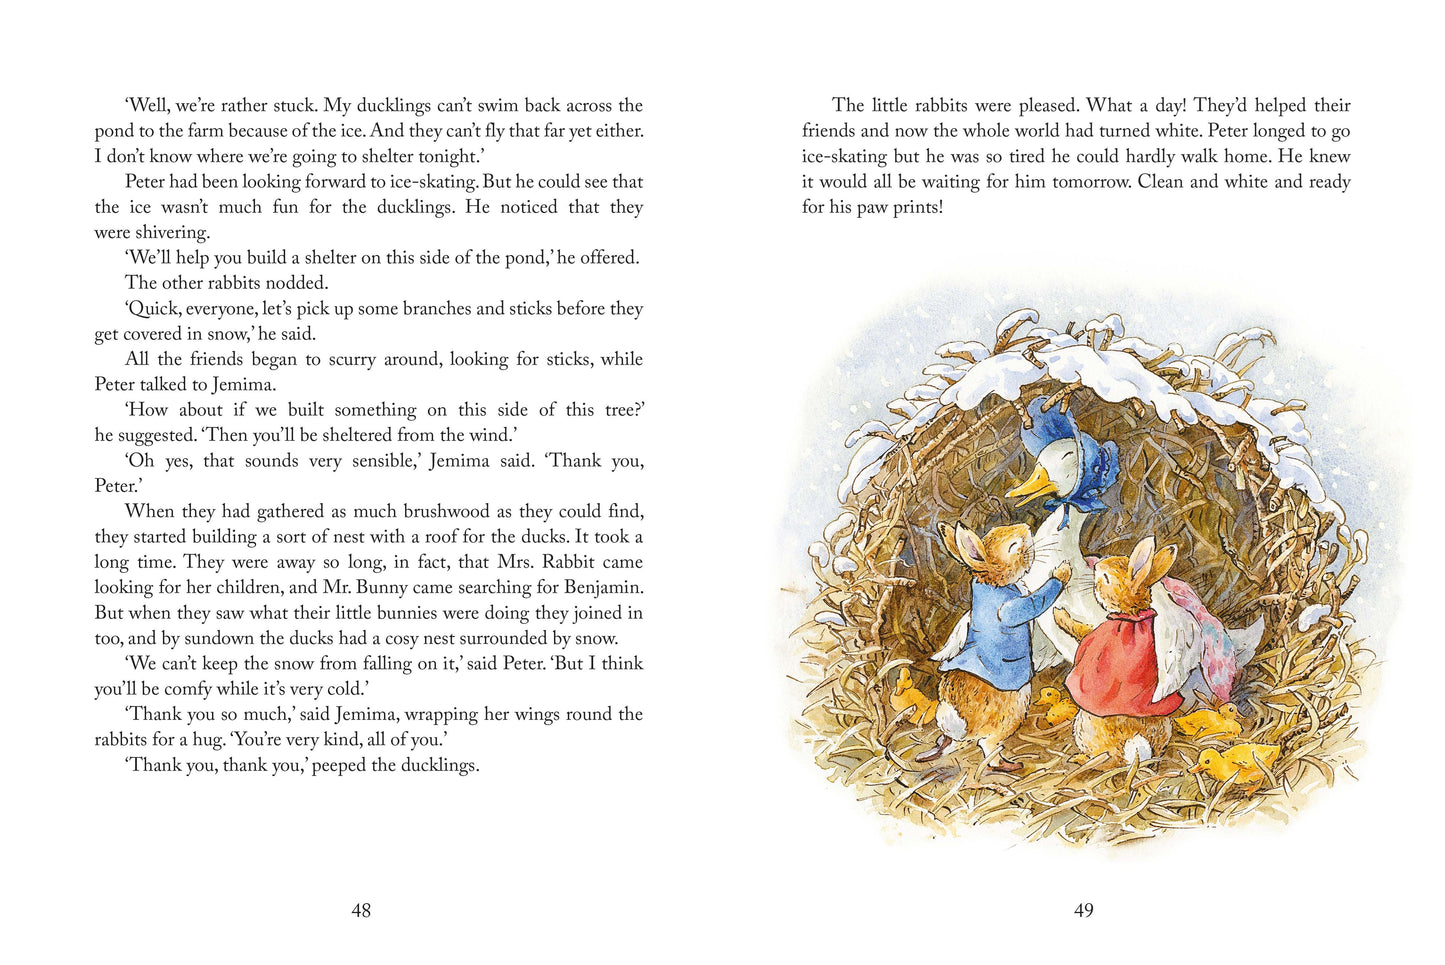 Peter Rabbit Christmas is Coming (Countdown/Advent Book) - книга на англиски јазик